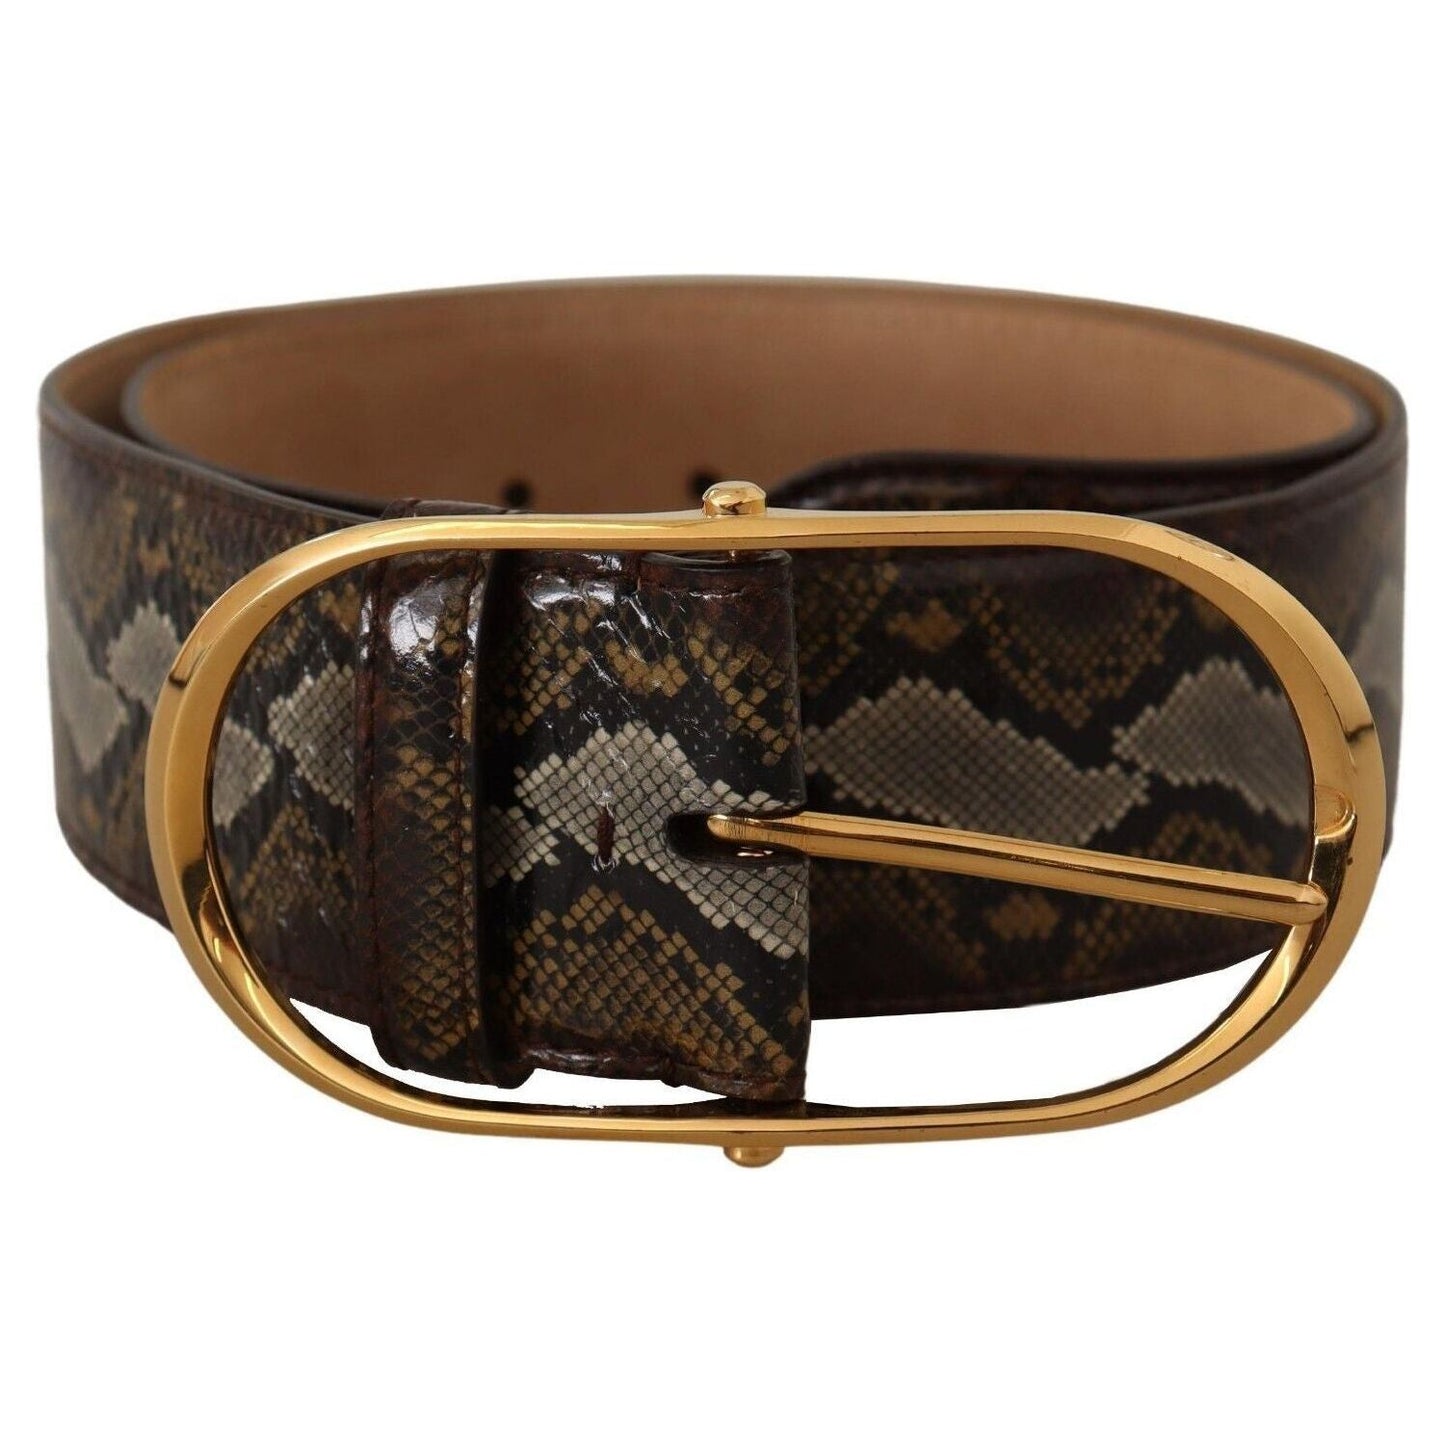 Dolce & Gabbana Elegant Gold Oval Buckle Leather Belt WOMAN BELTS brown-python-leather-gold-oval-buckle-belt s-l1600-2-275-5b721c75-e0e.jpg